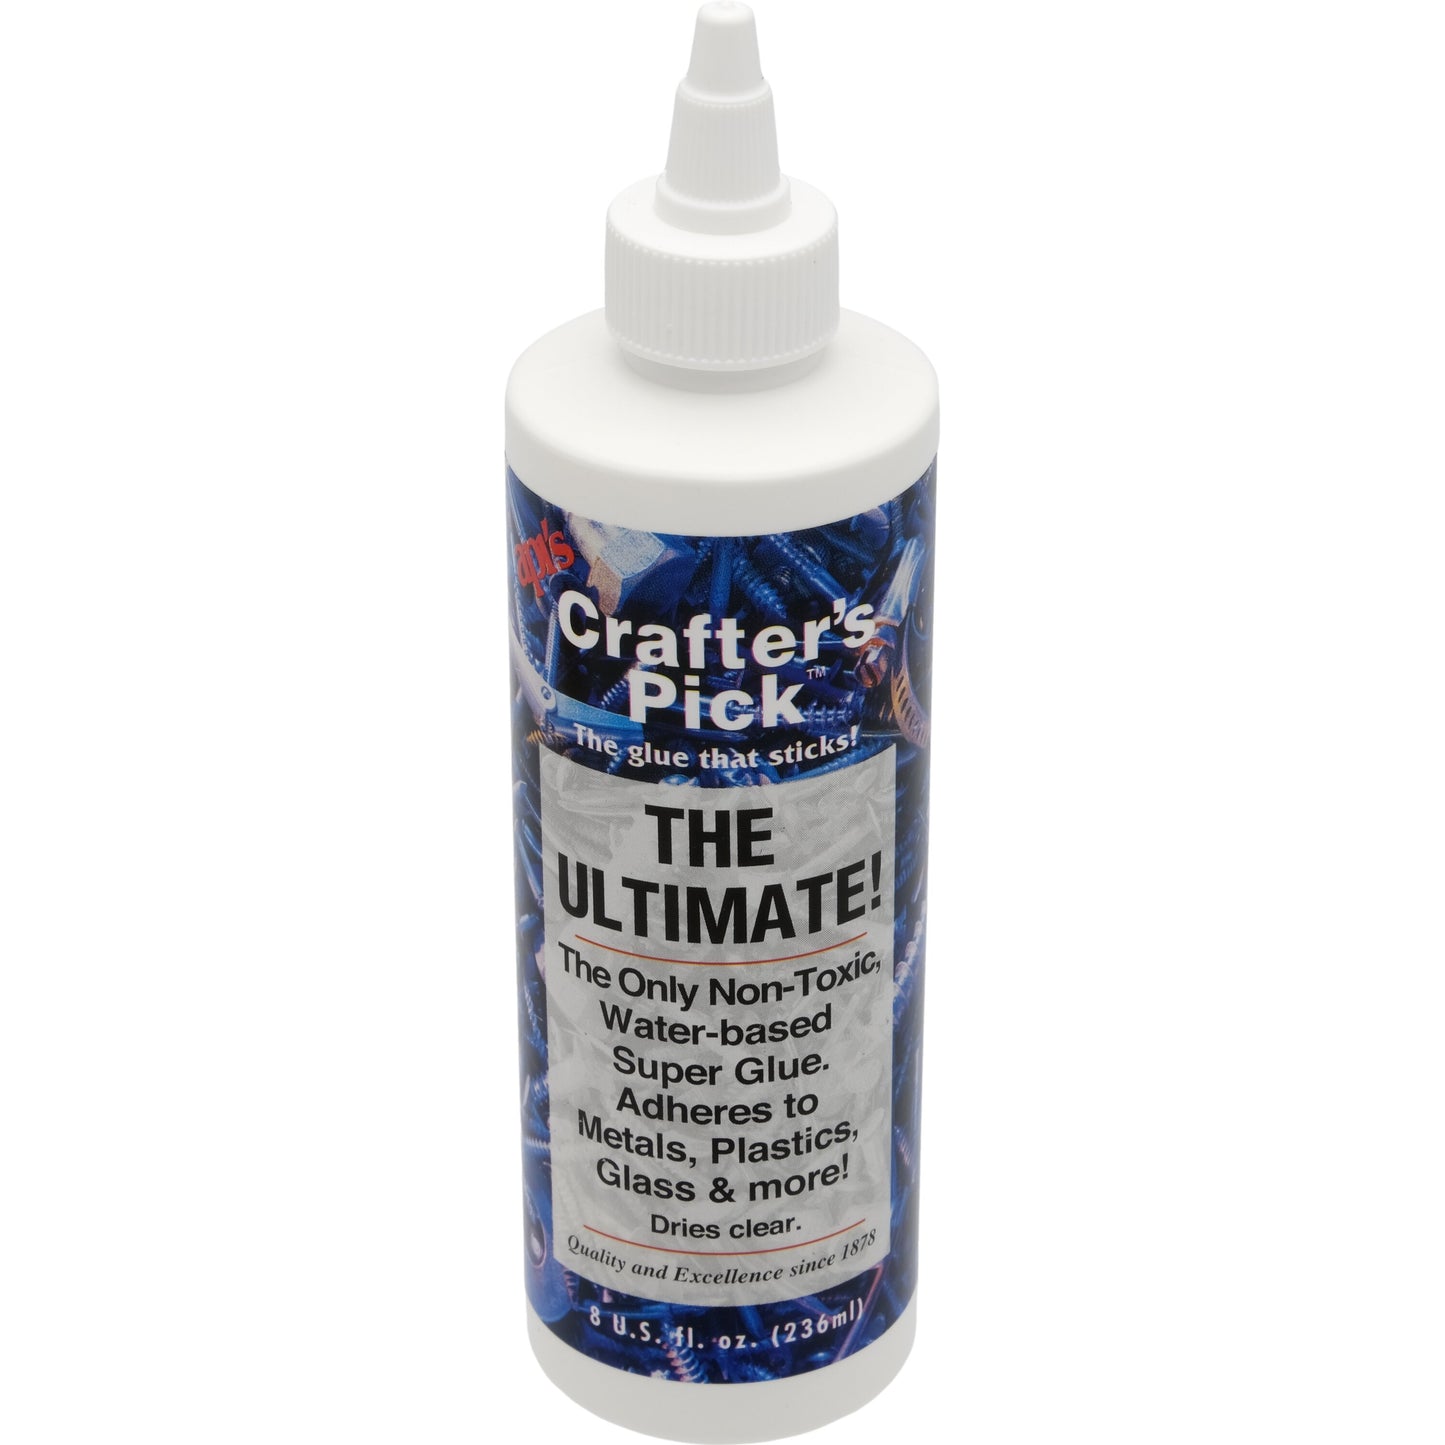 Crafter's Pick The Ultimate! Super Glue 24oz 3Pcs